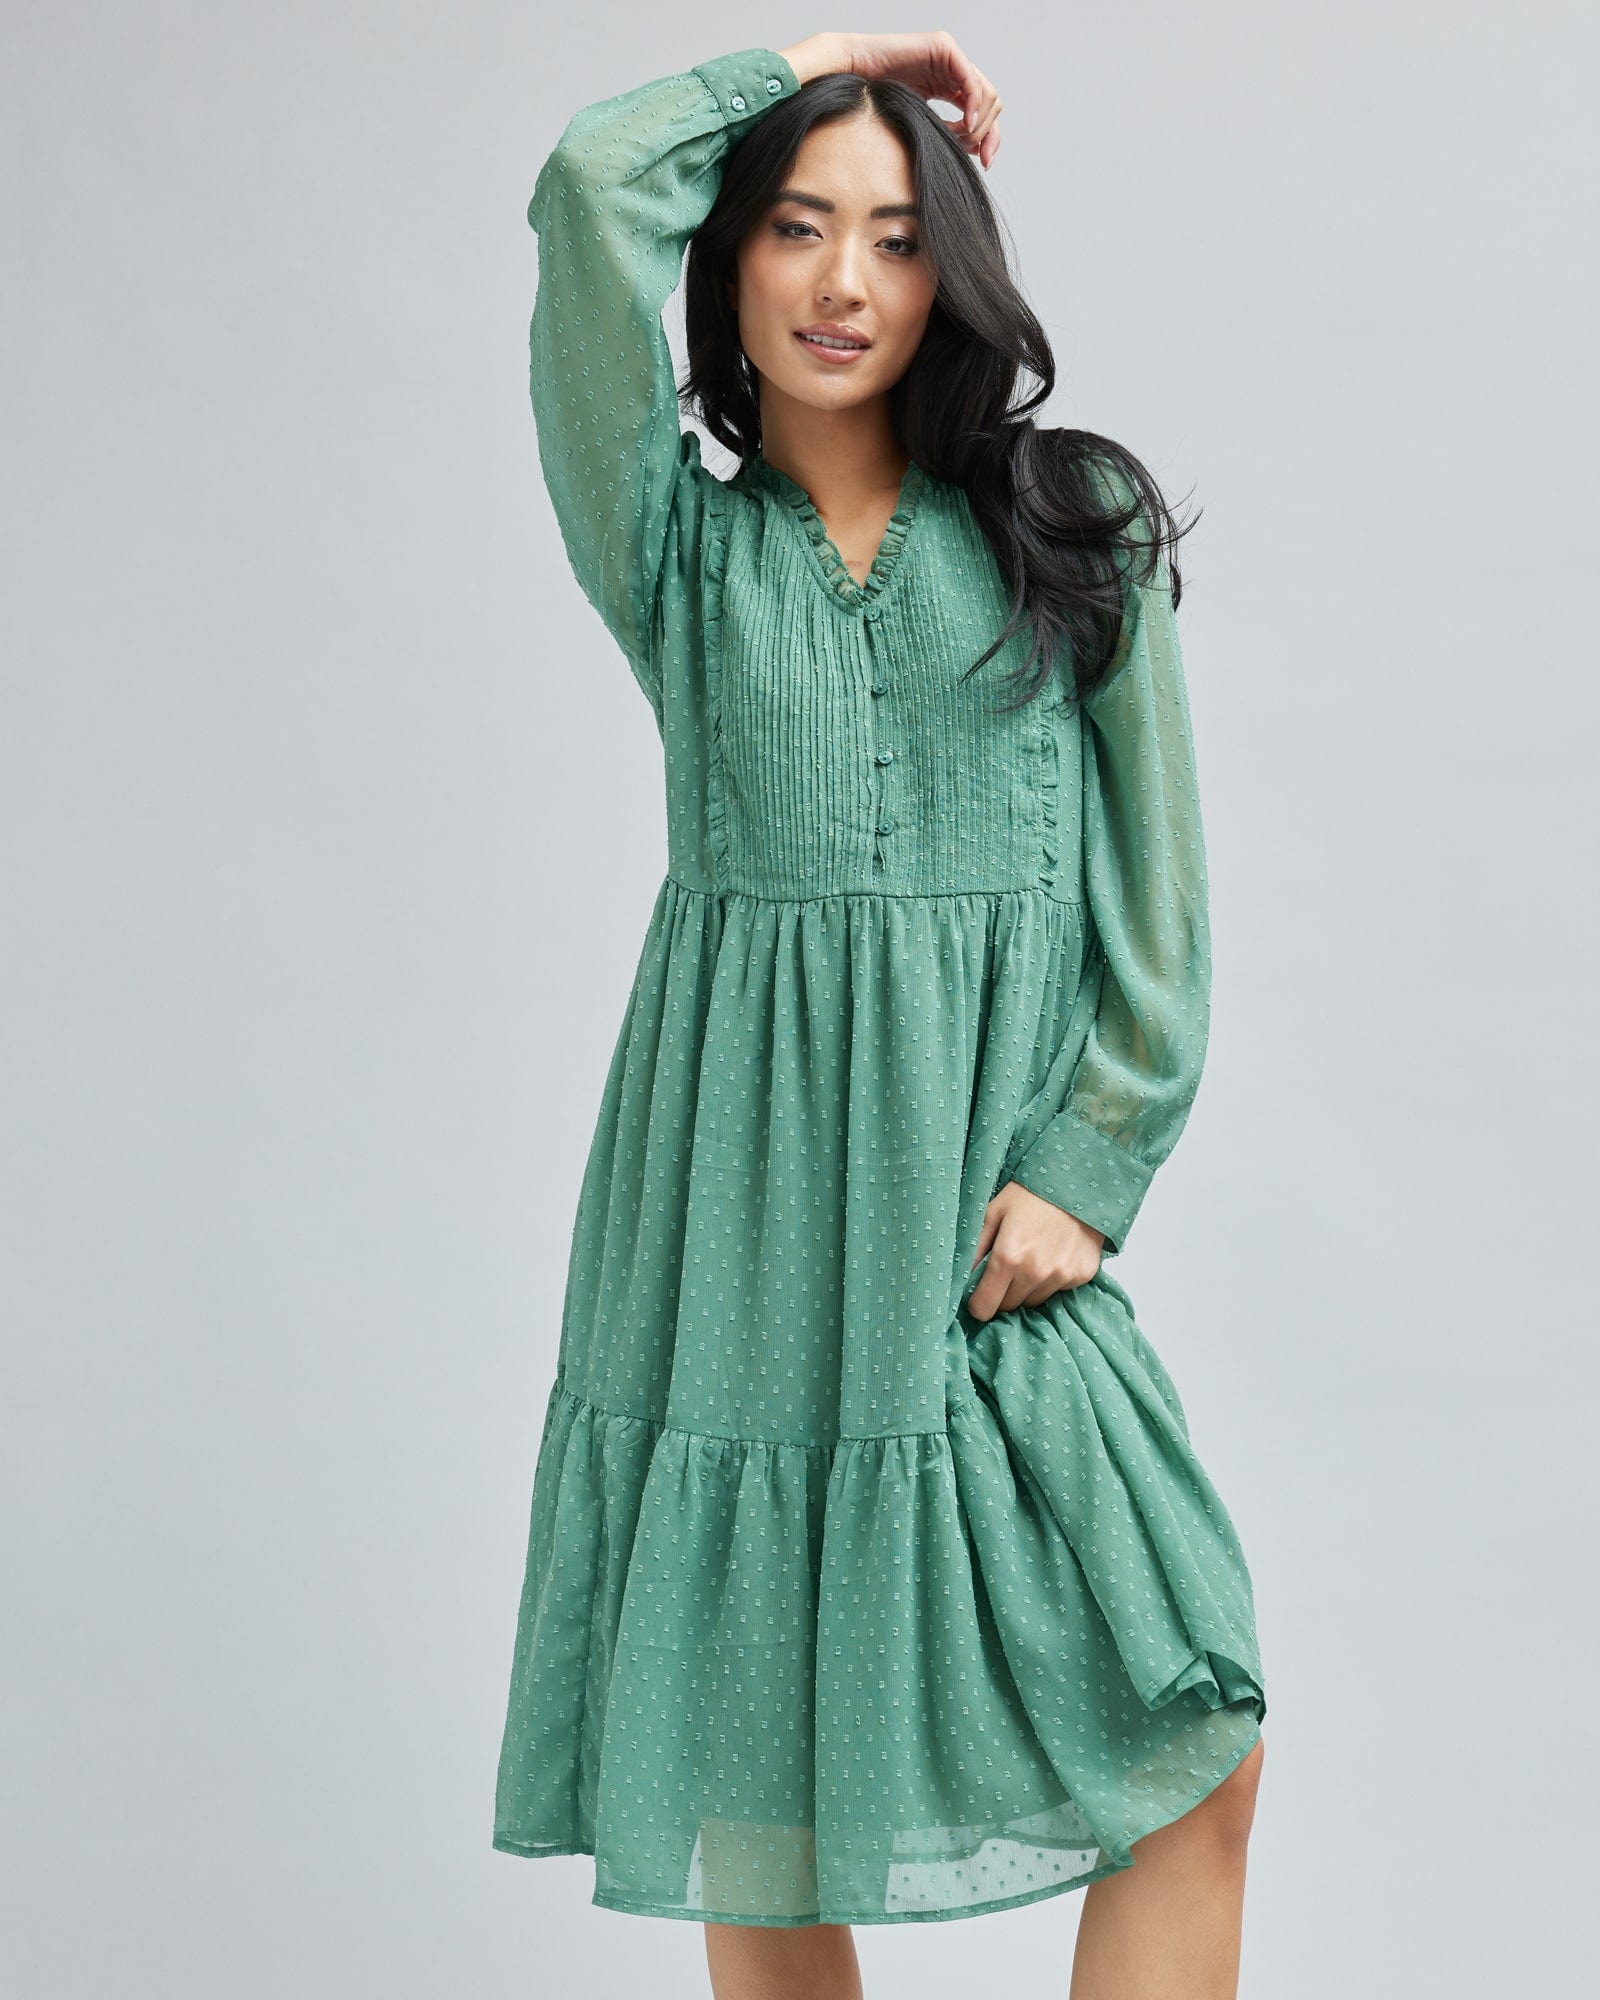 Woman in a long sleeve, green, midi length dress